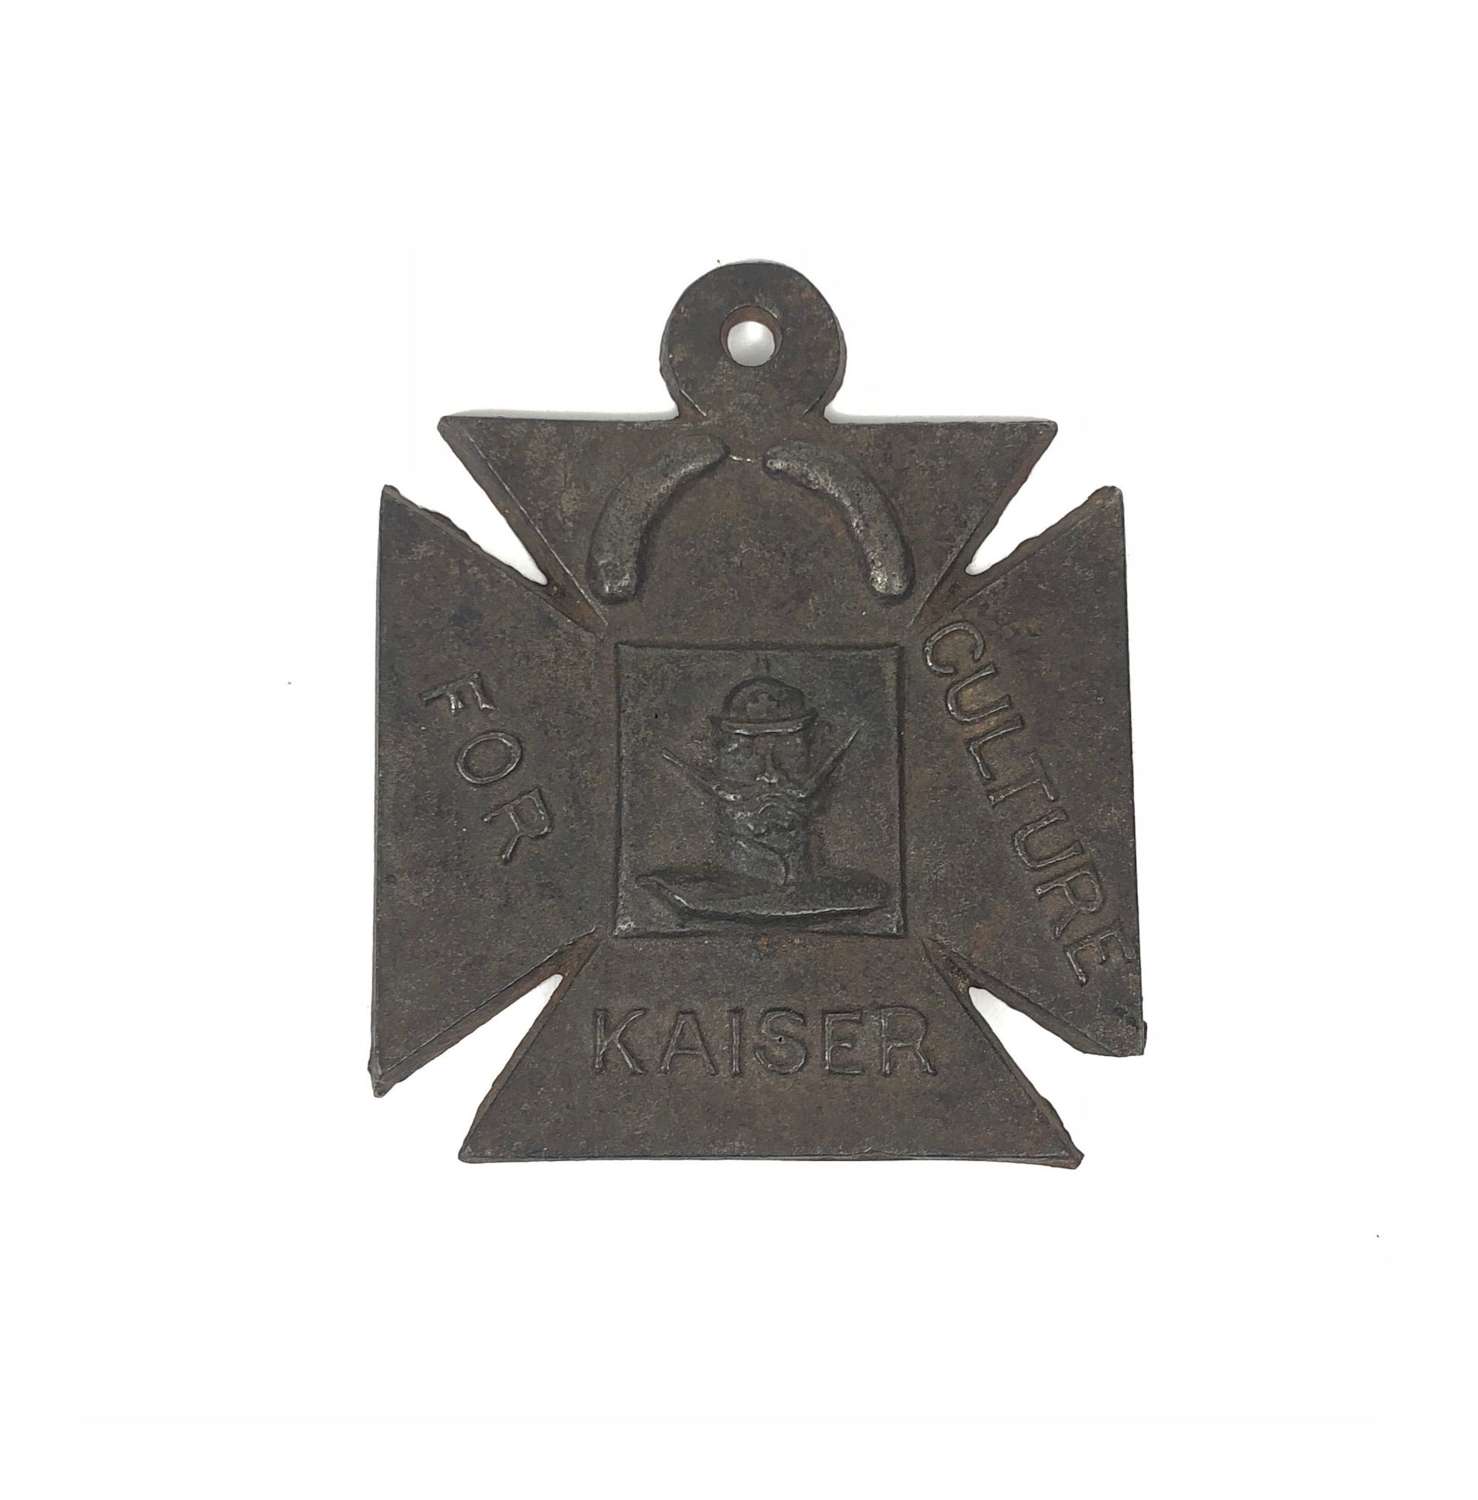 WW1 Kultur Cross British anti German propaganda Large Iron Cross Medal